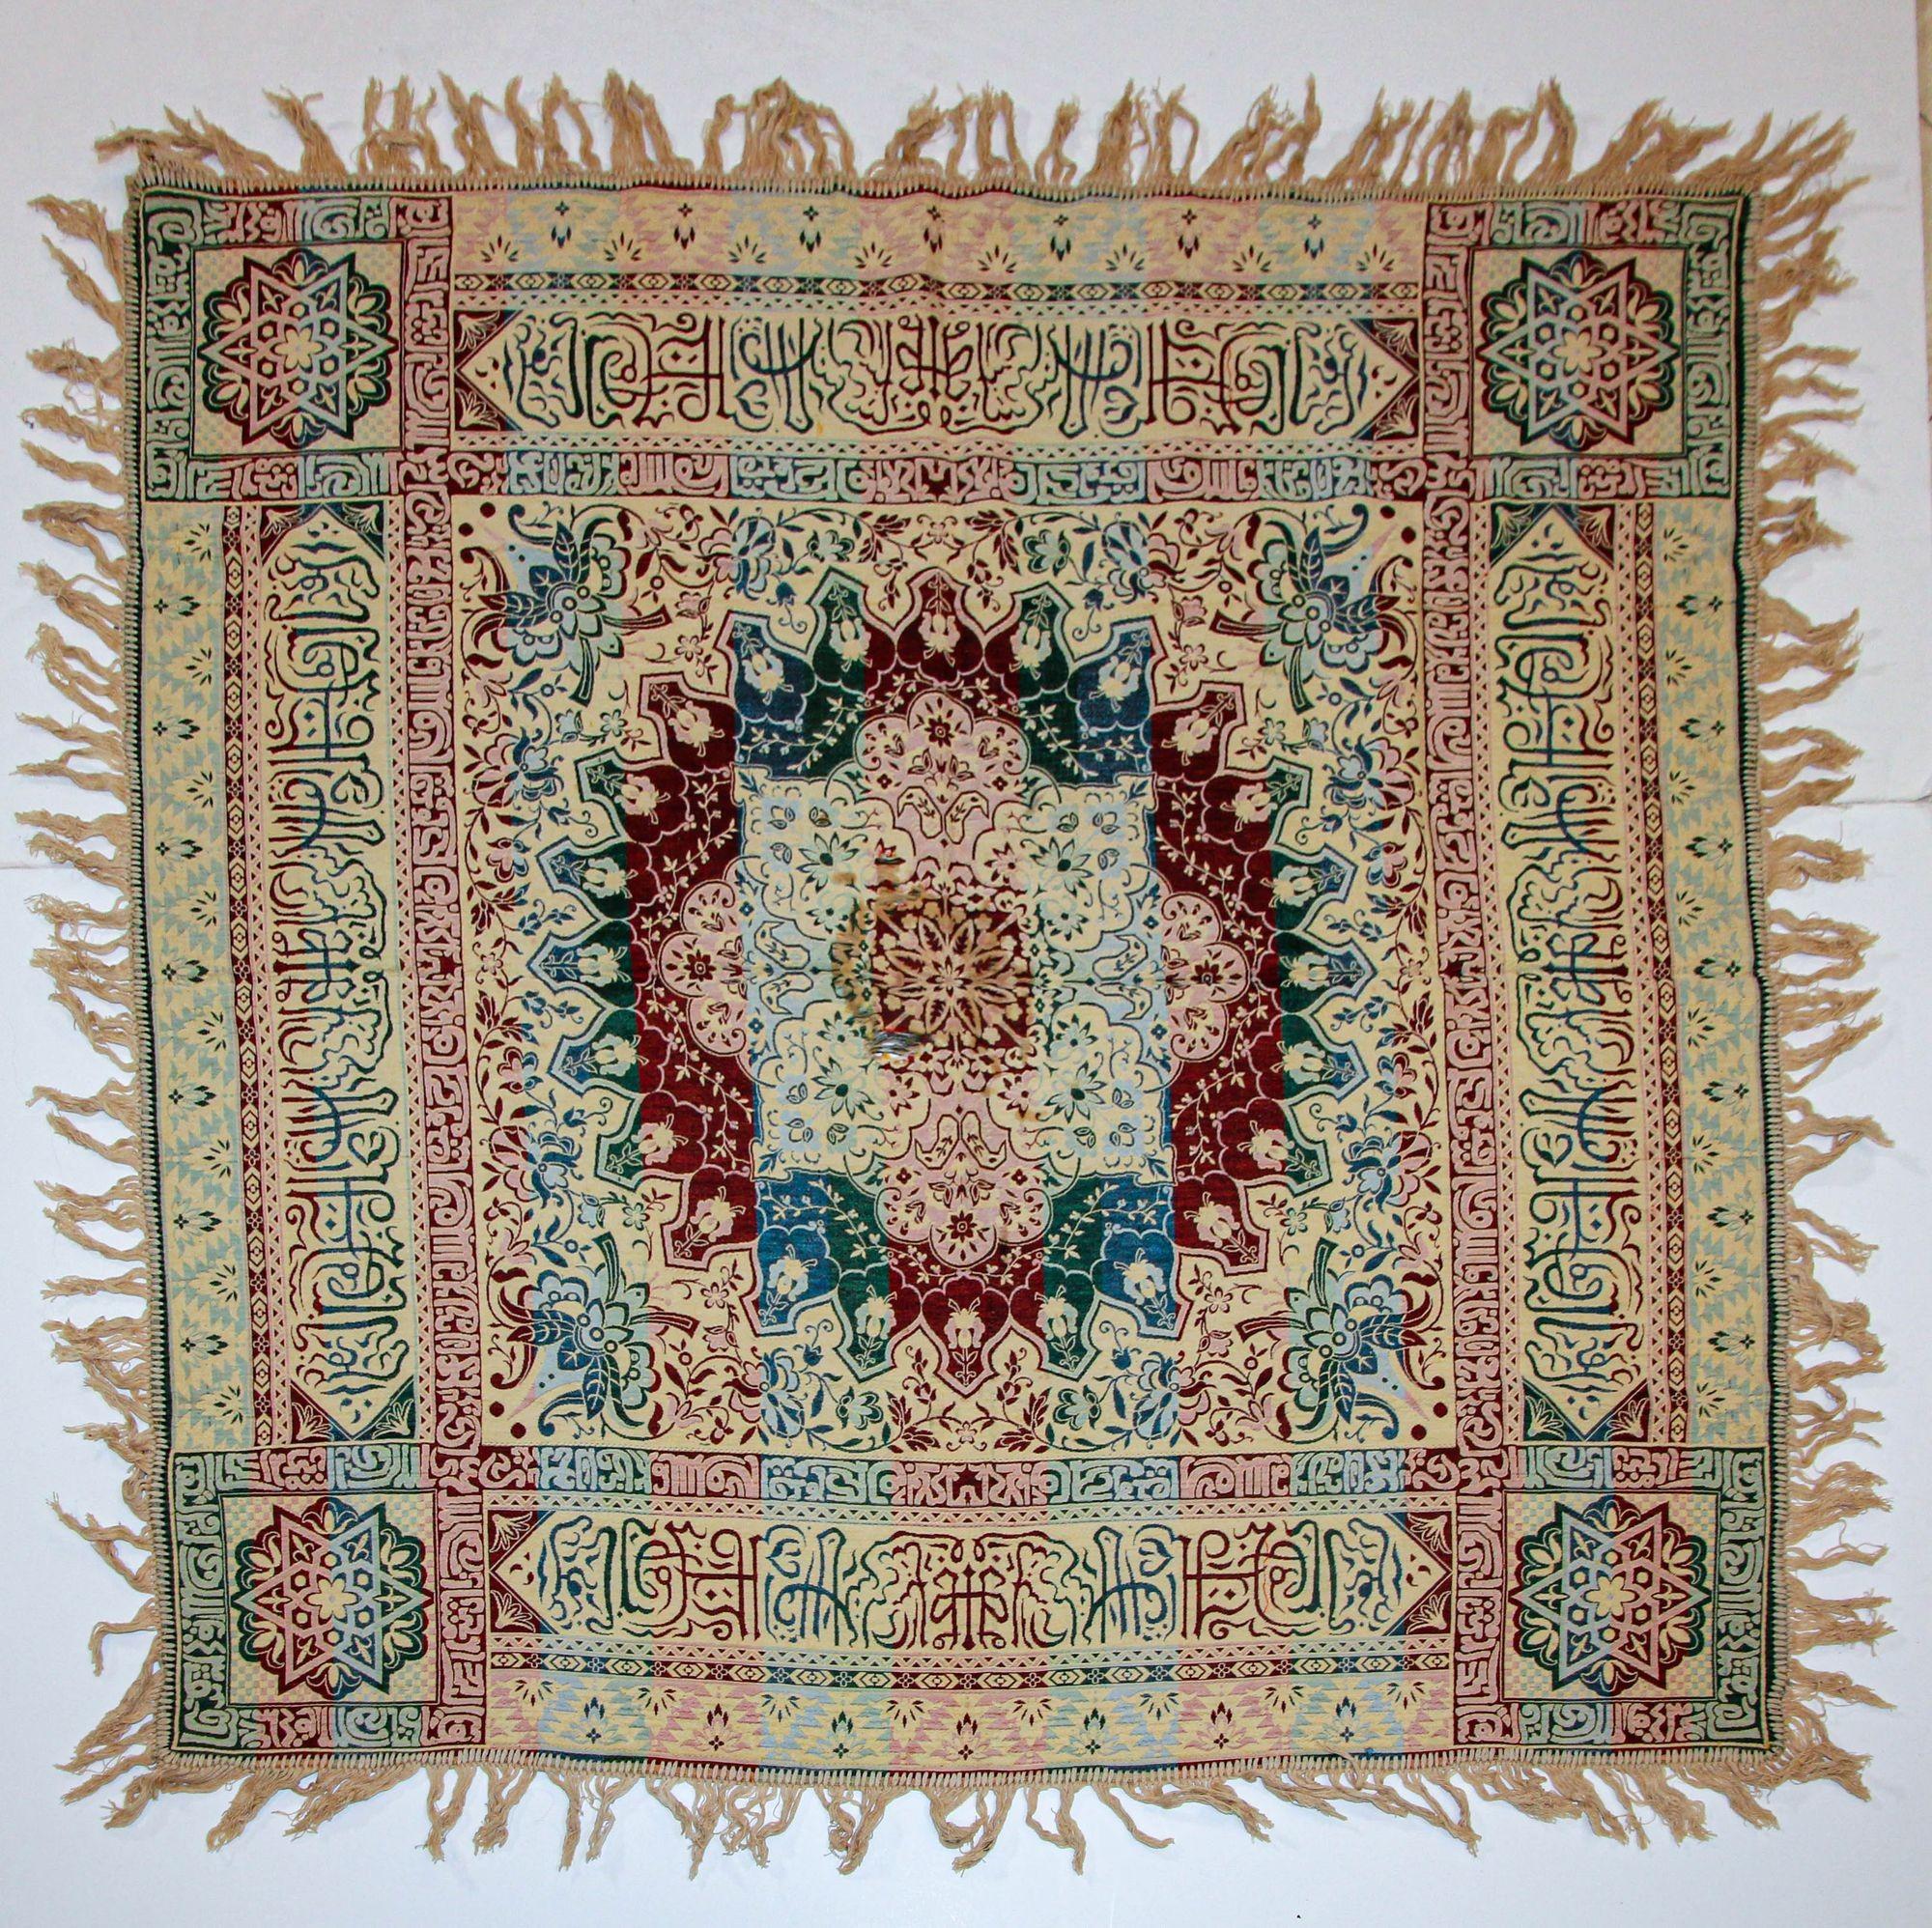 1920s Antique Granada Spain Moorish Islamic Tapestry with Arabic Writing 1